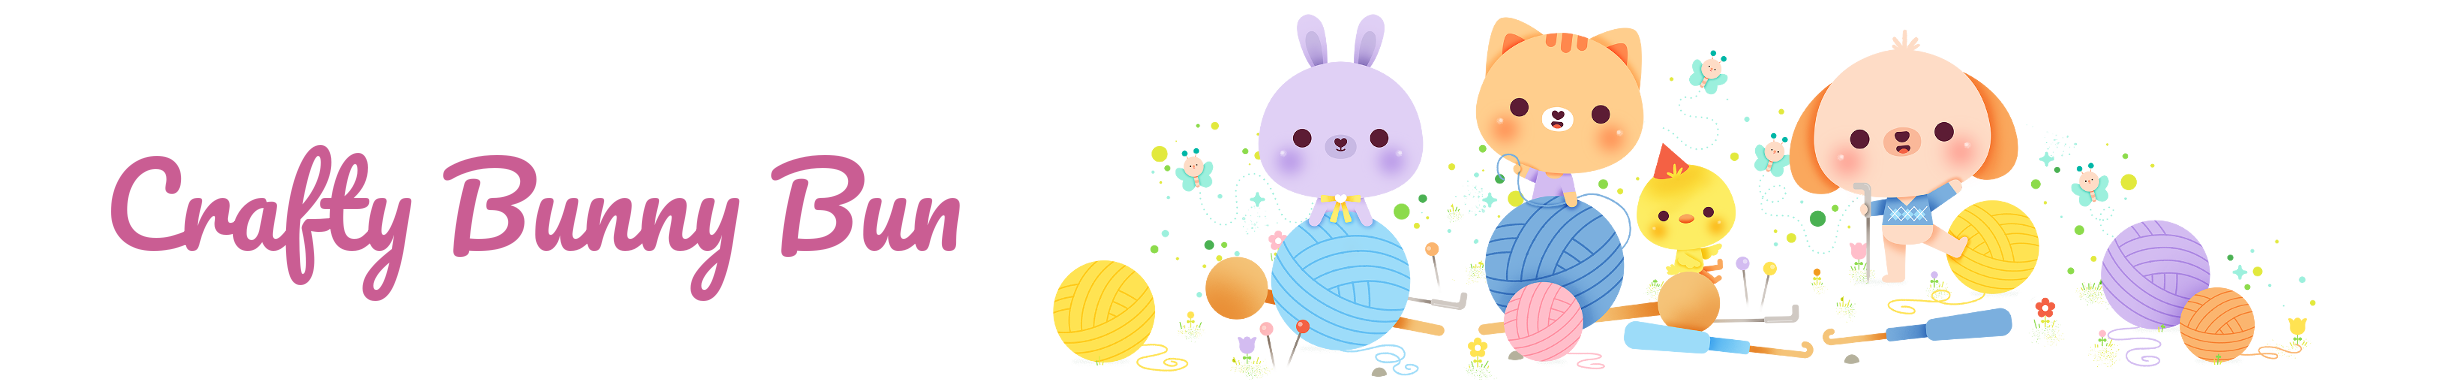 crafty bunny bun logo and banner